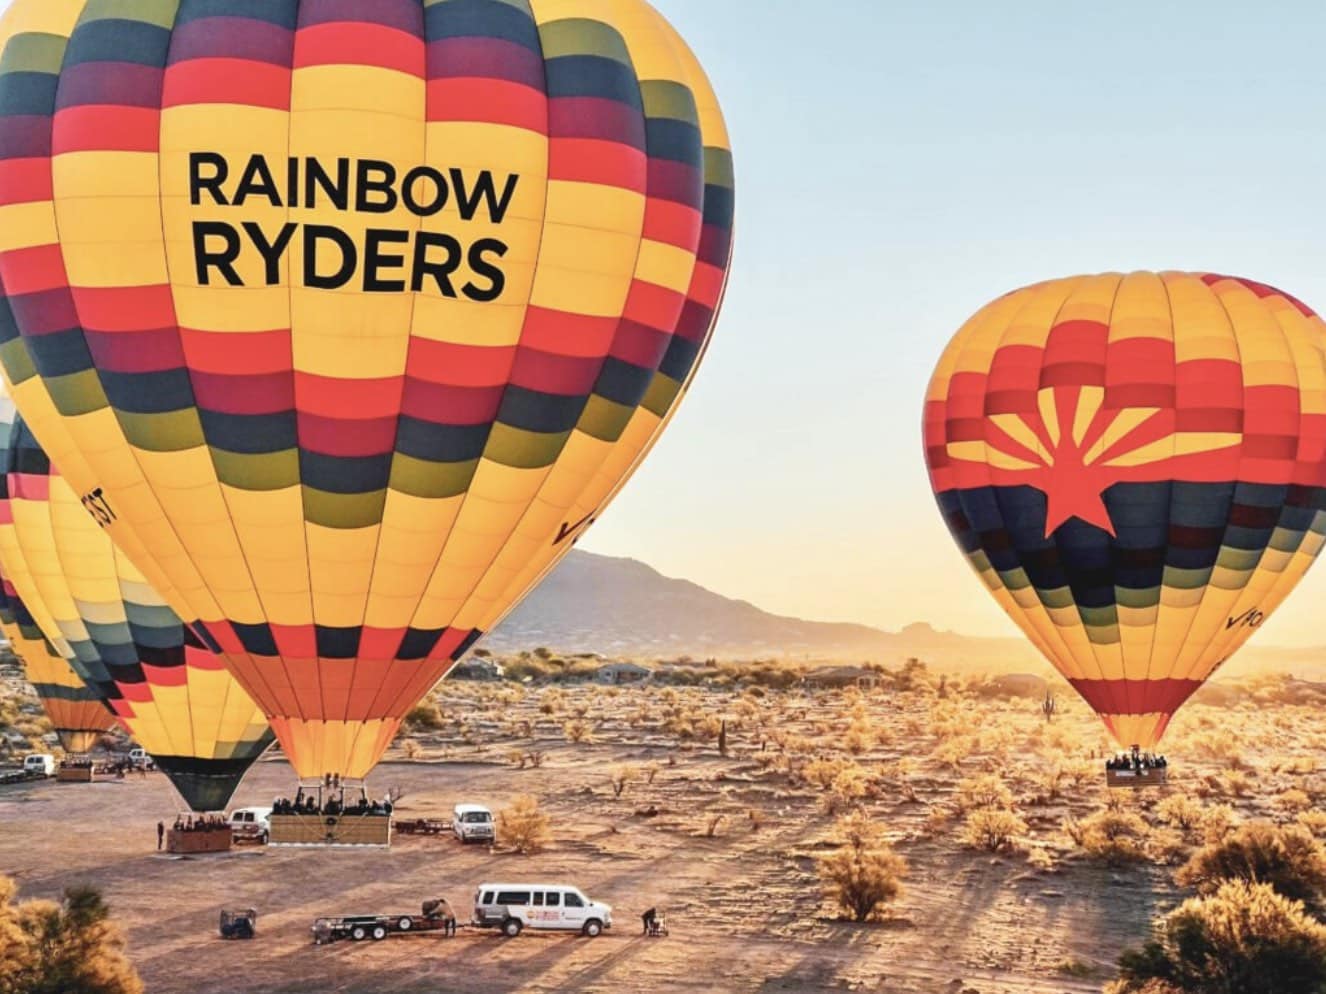 Rainbow Ryders Hot Air Balloon Rides New Mexico